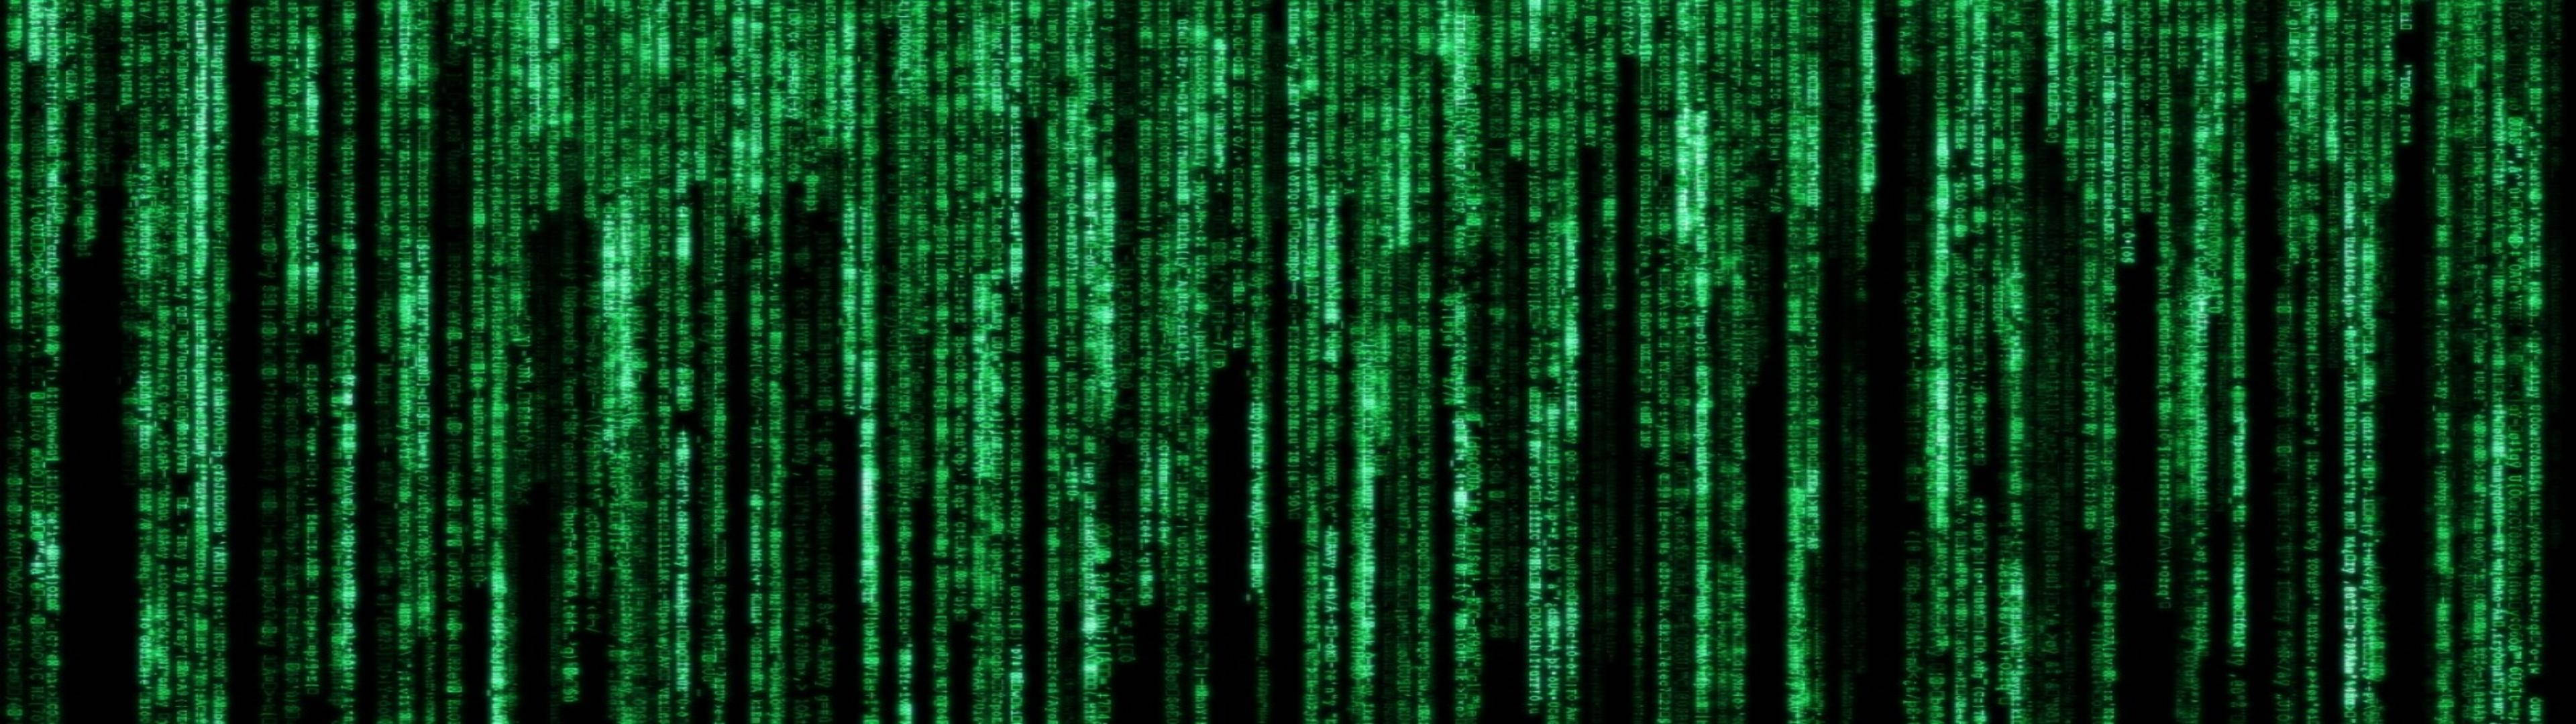 Green Binary Hacker Matrix Wallpaper